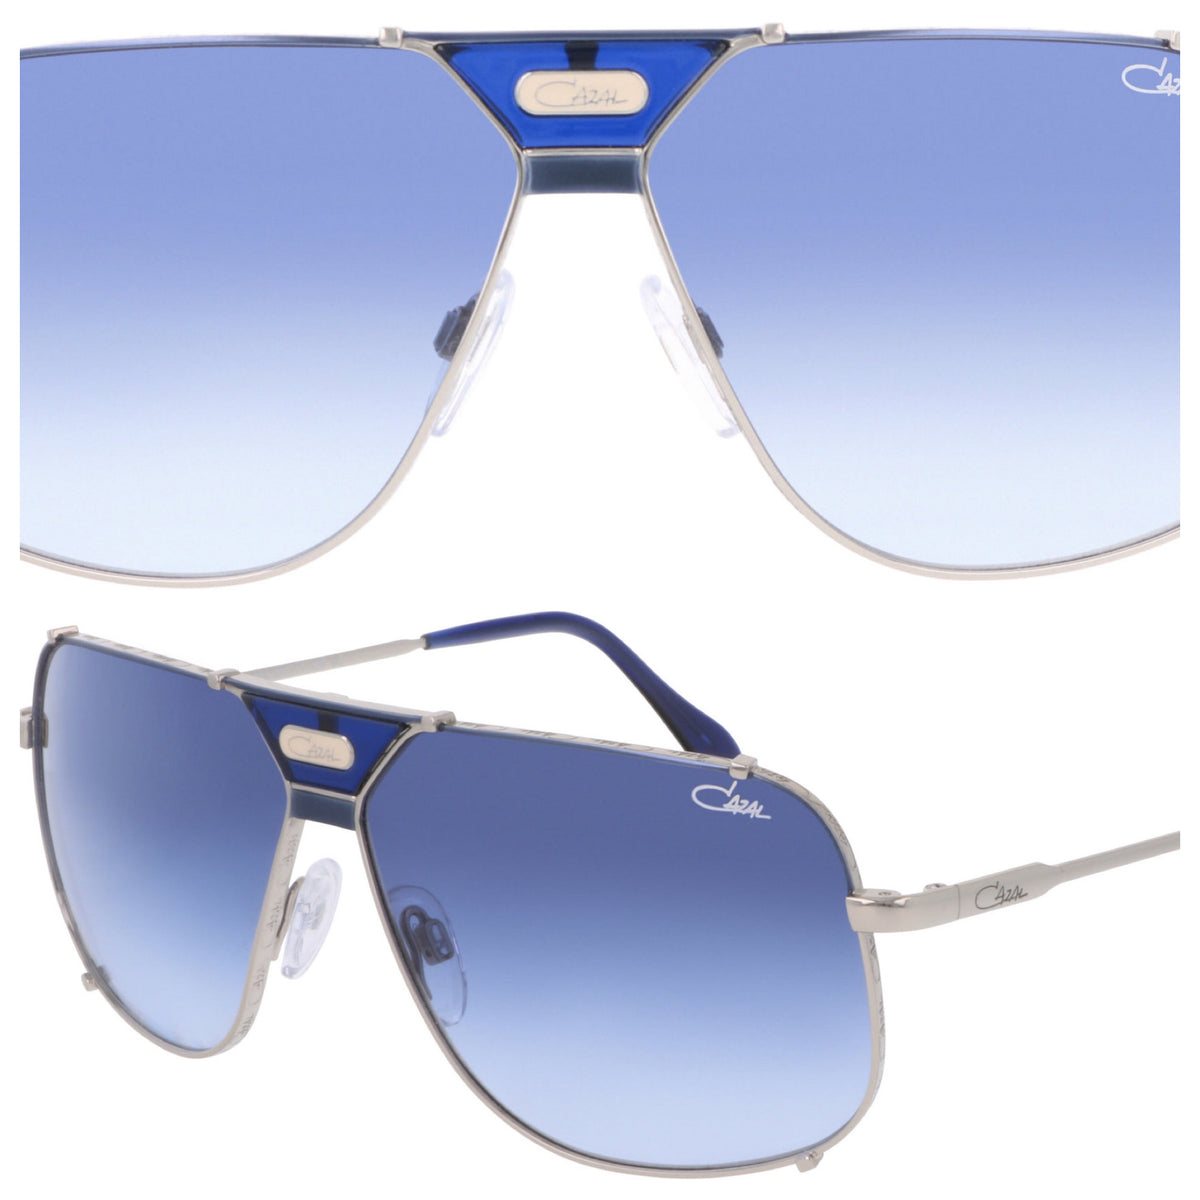 Cazal Sunglasses 994 - Night Blue